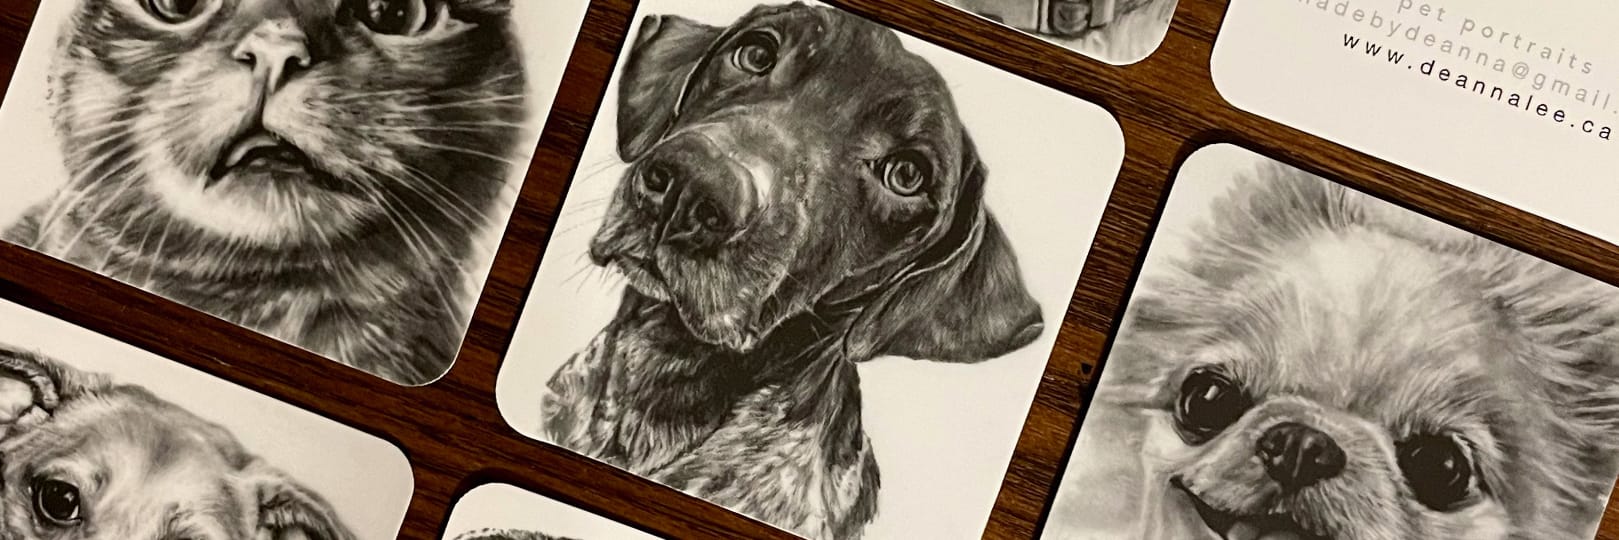 Professional Pet Portraits  Dog Drawing Artists Using Print  MOO Blog